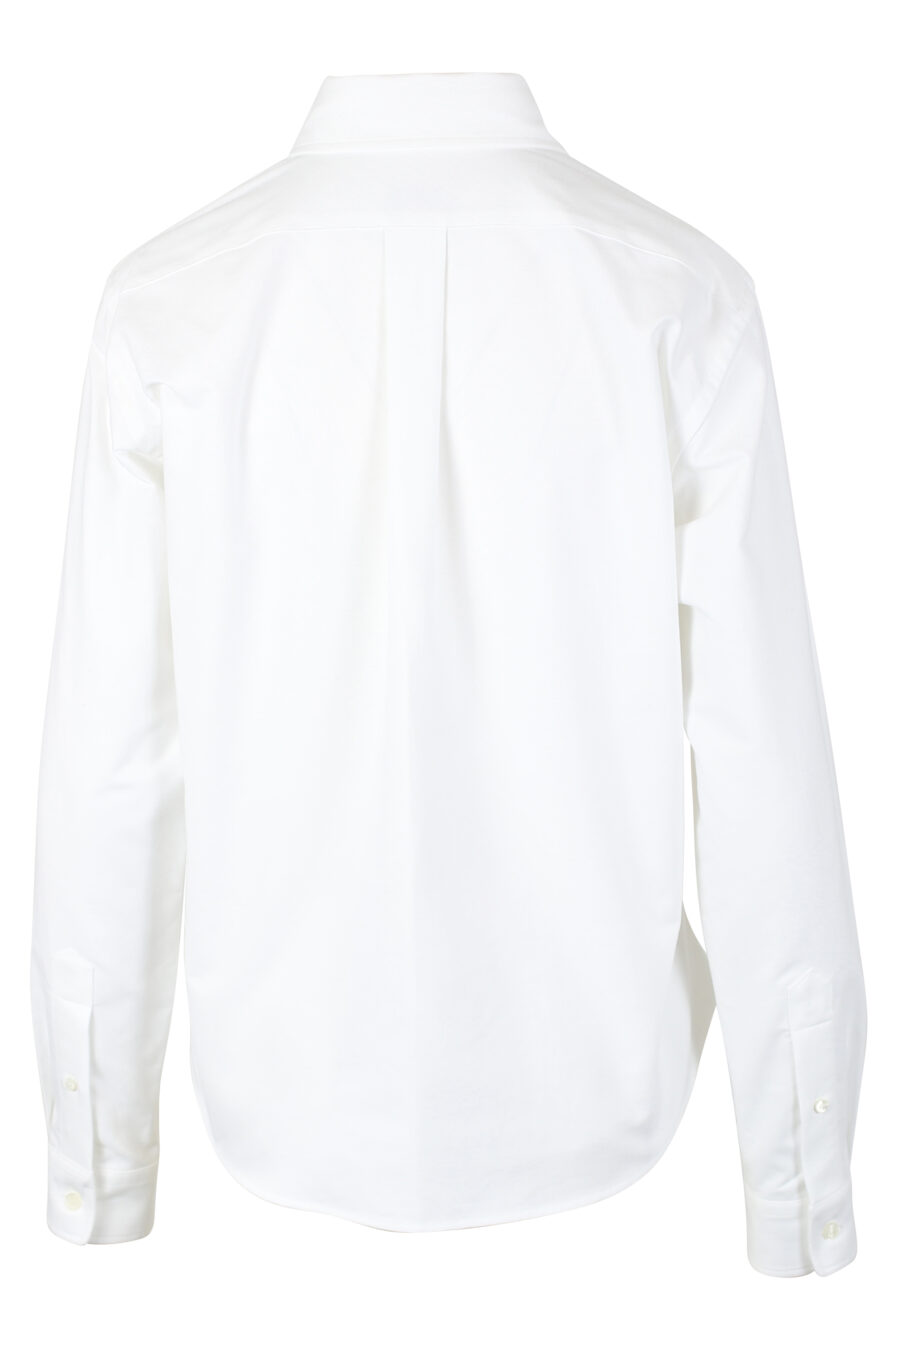 Camisa blanca con minilogo naranja - IMG 9789